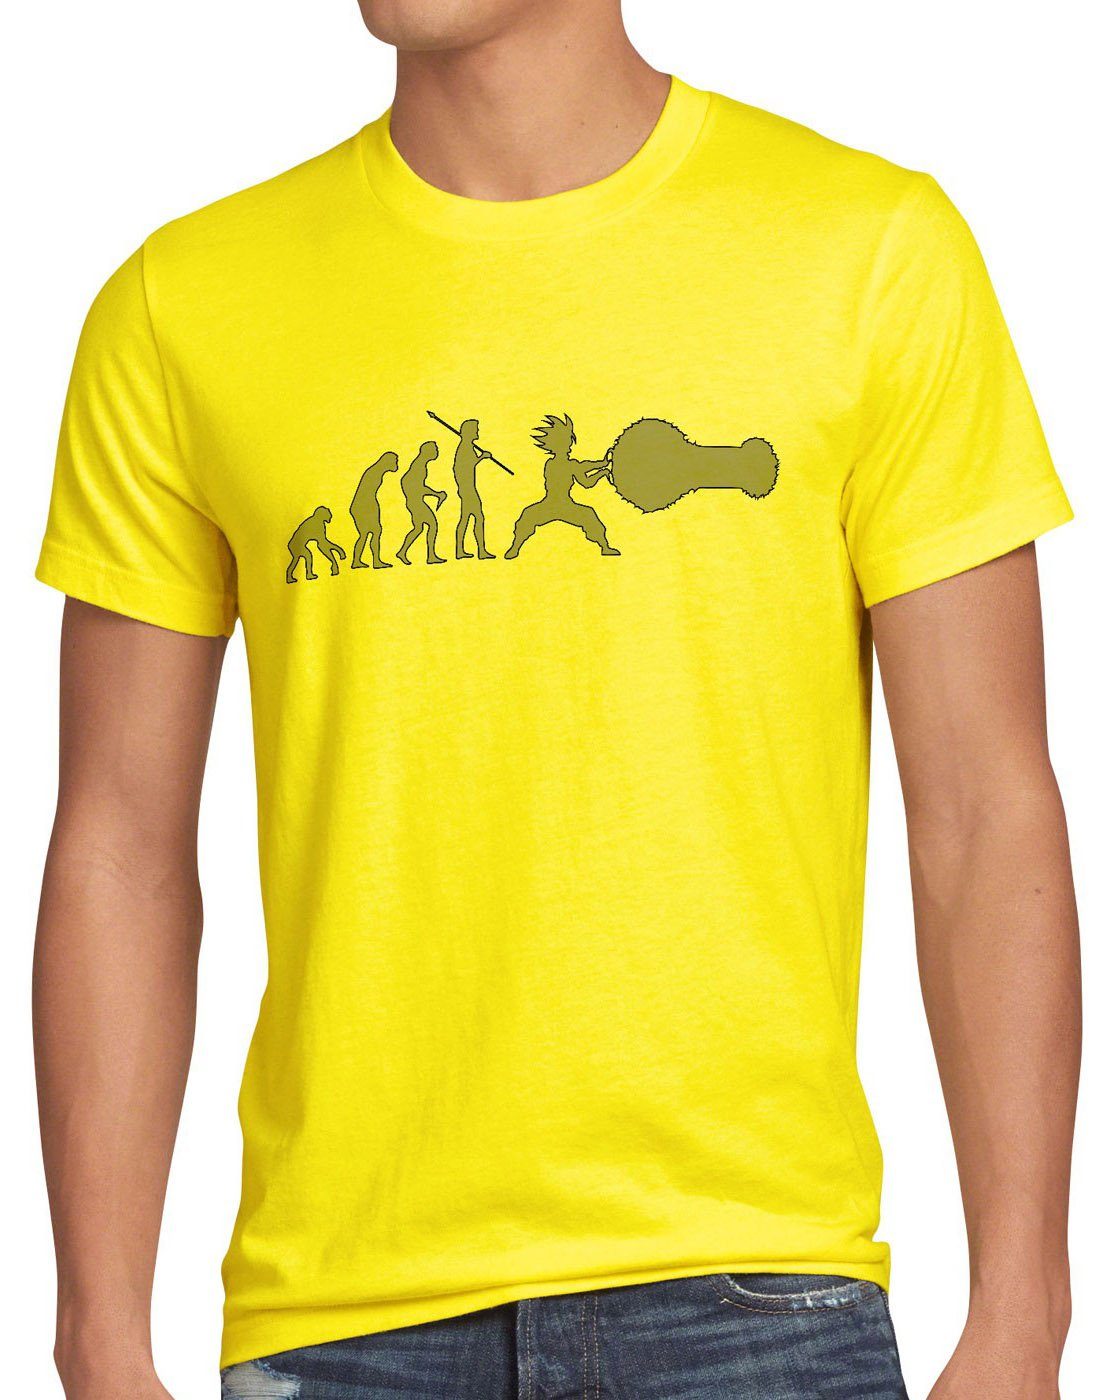 style3 Print-Shirt Herren T-Shirt Sayalution Evolution Goku Dragon son ball fusion vegeta funshirt gelb